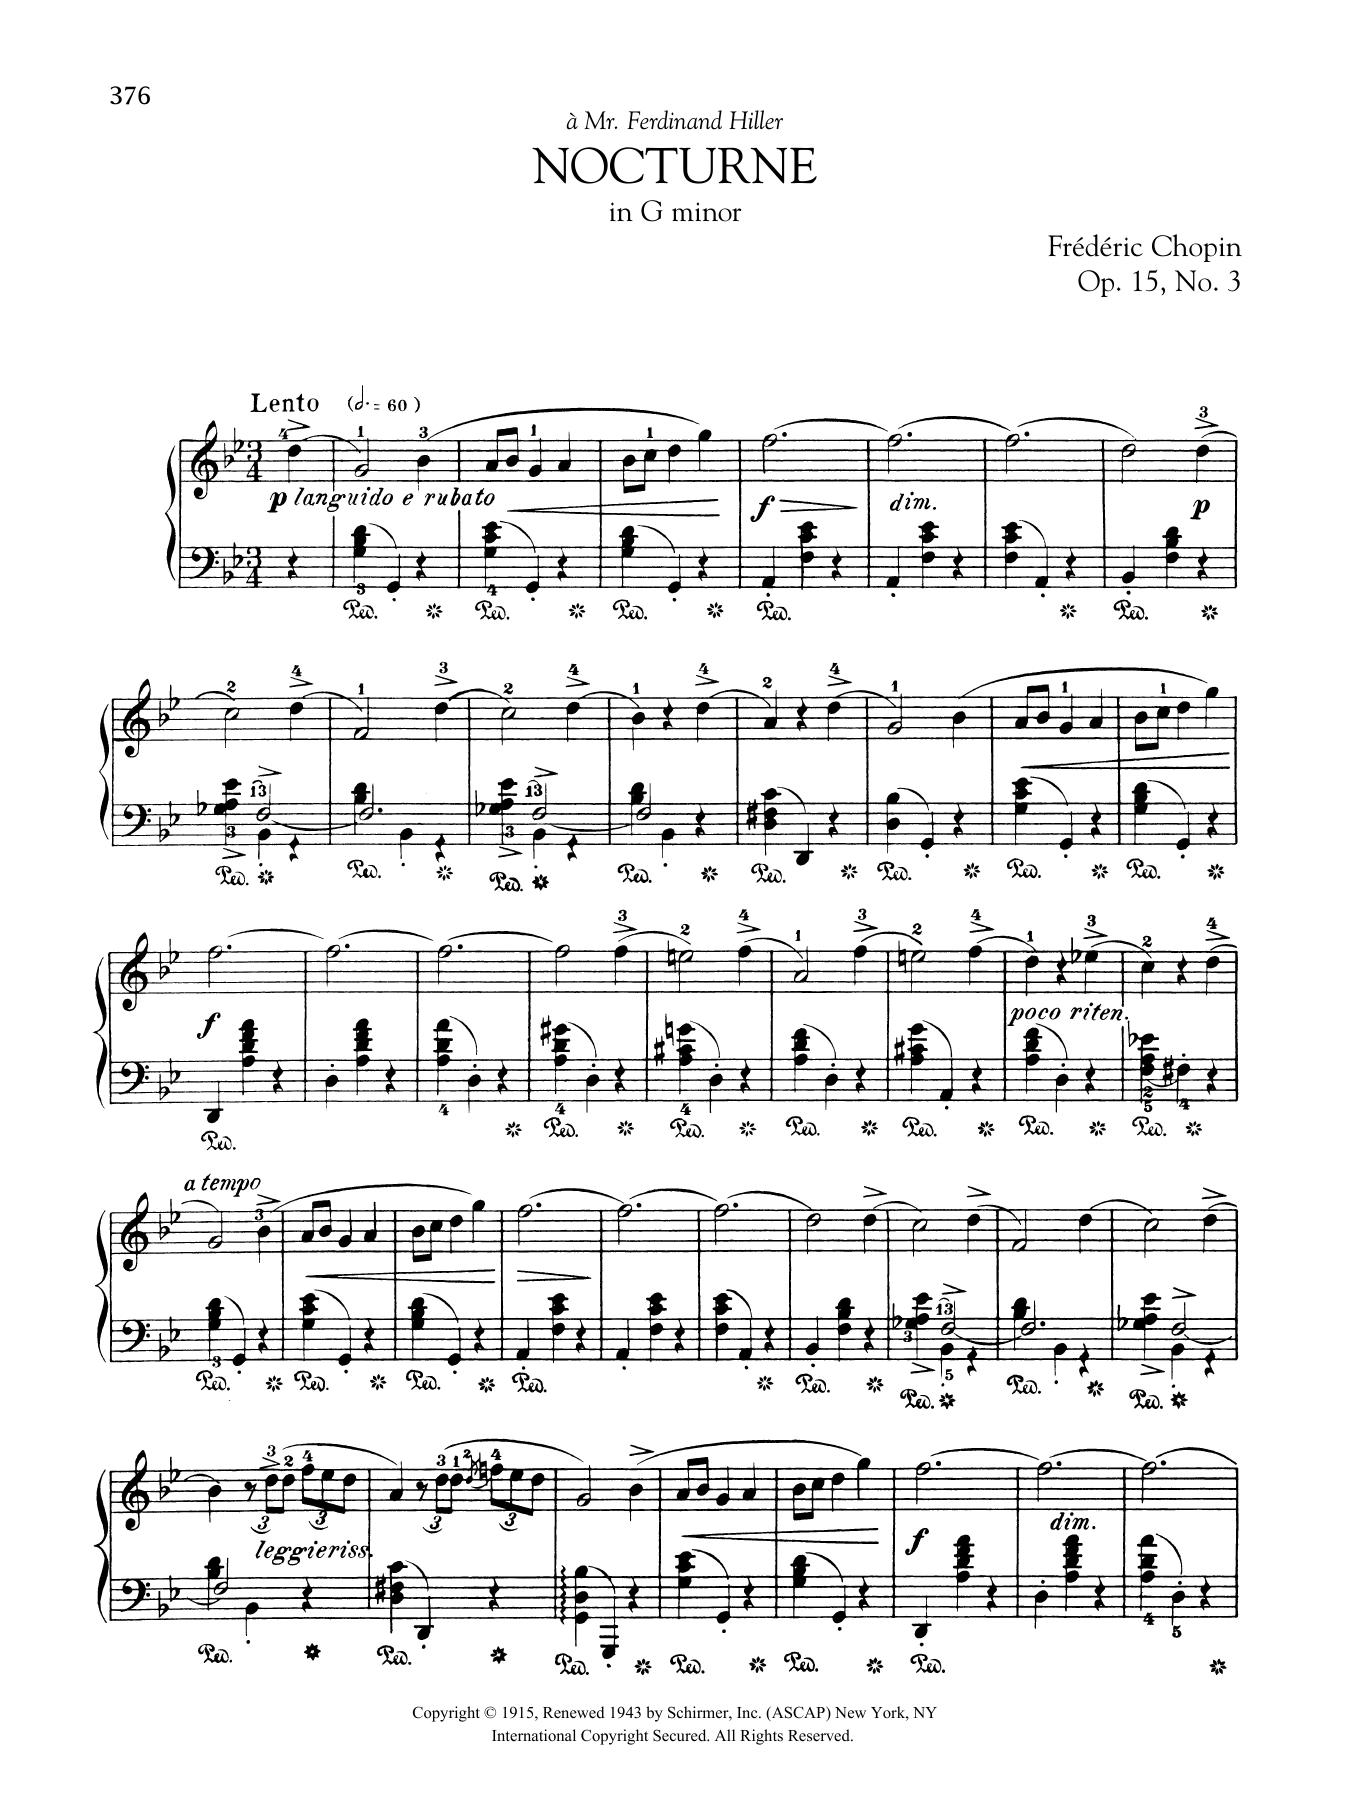 Nocturne in G minor, Op. 15, No. 3 sheet music